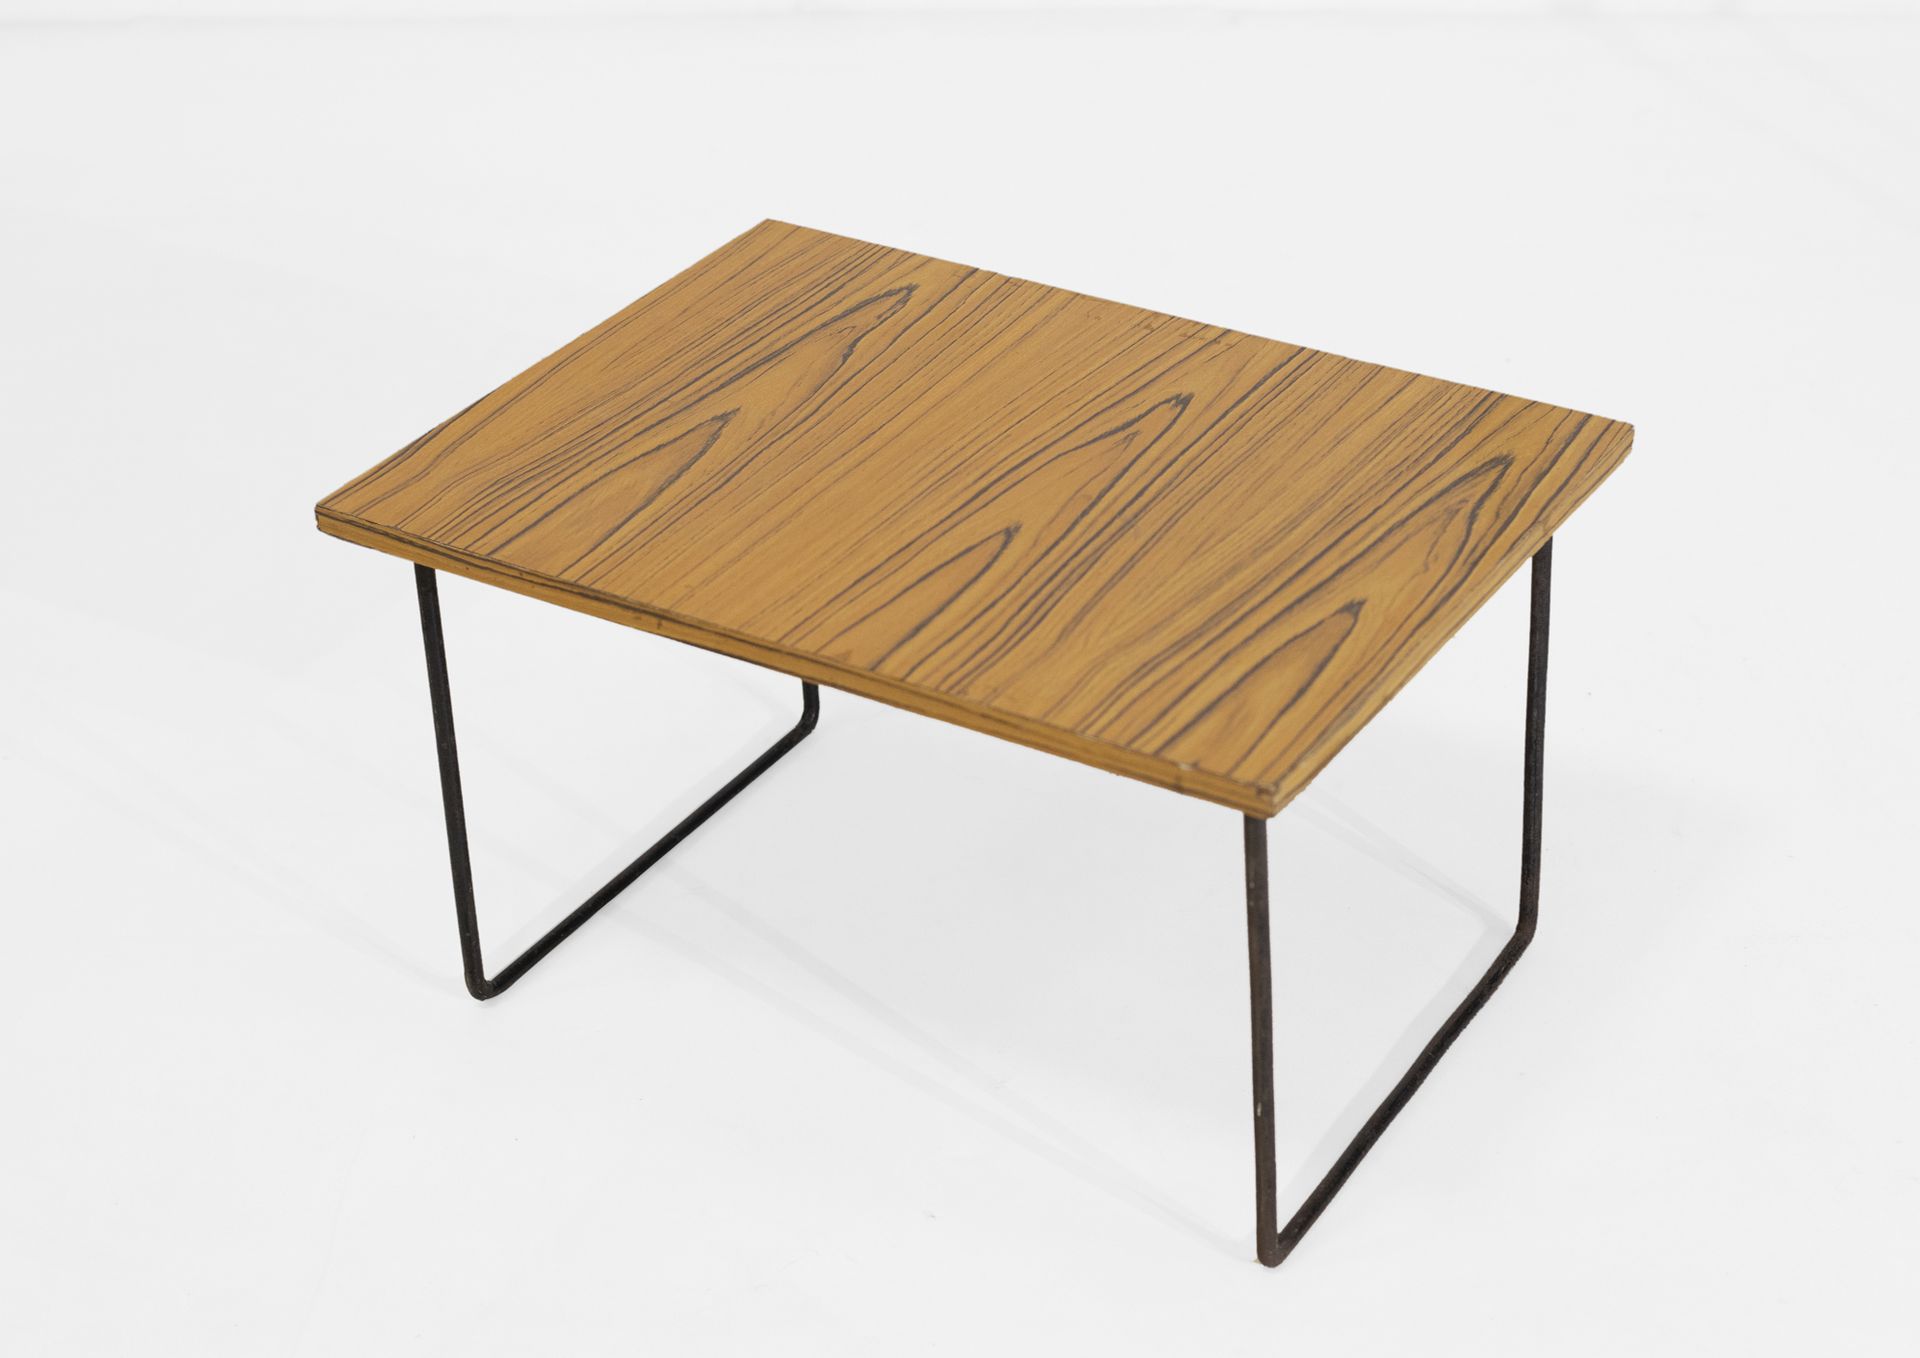 Pierre GUARICHE (1926-1995) 长方形咖啡桌

黑色漆面金属和仿木模板

约1950年

高_35厘米，宽_46厘米，深_60厘米

(&hellip;